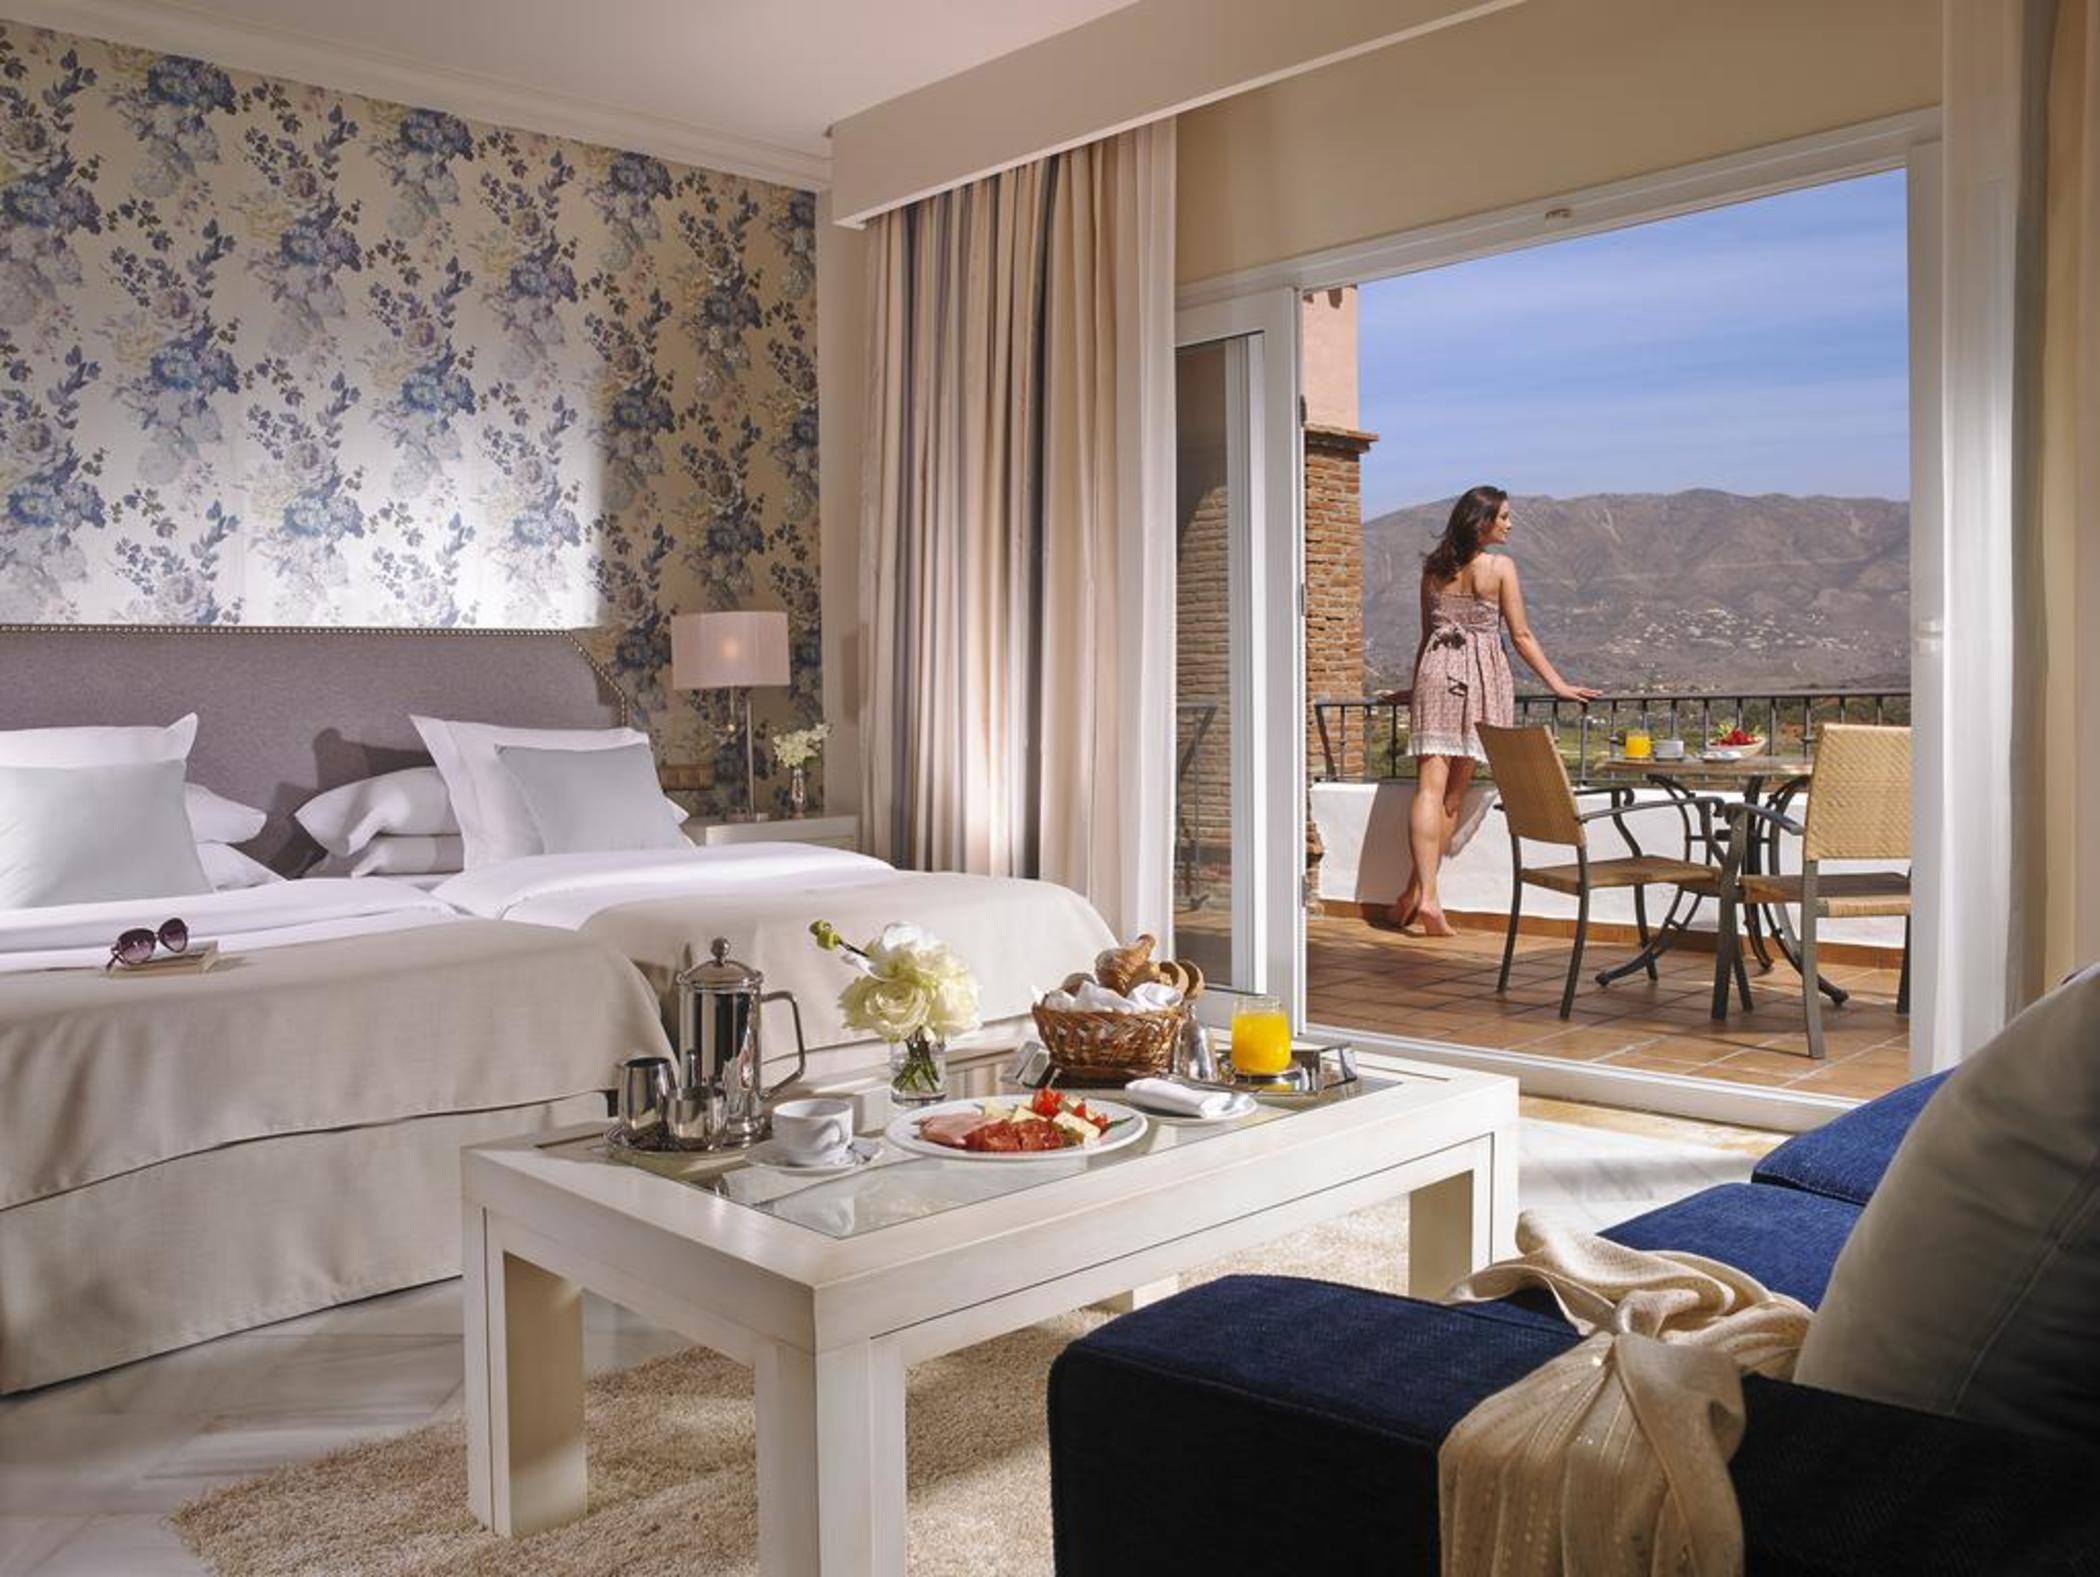 Hotel La Cala Resort